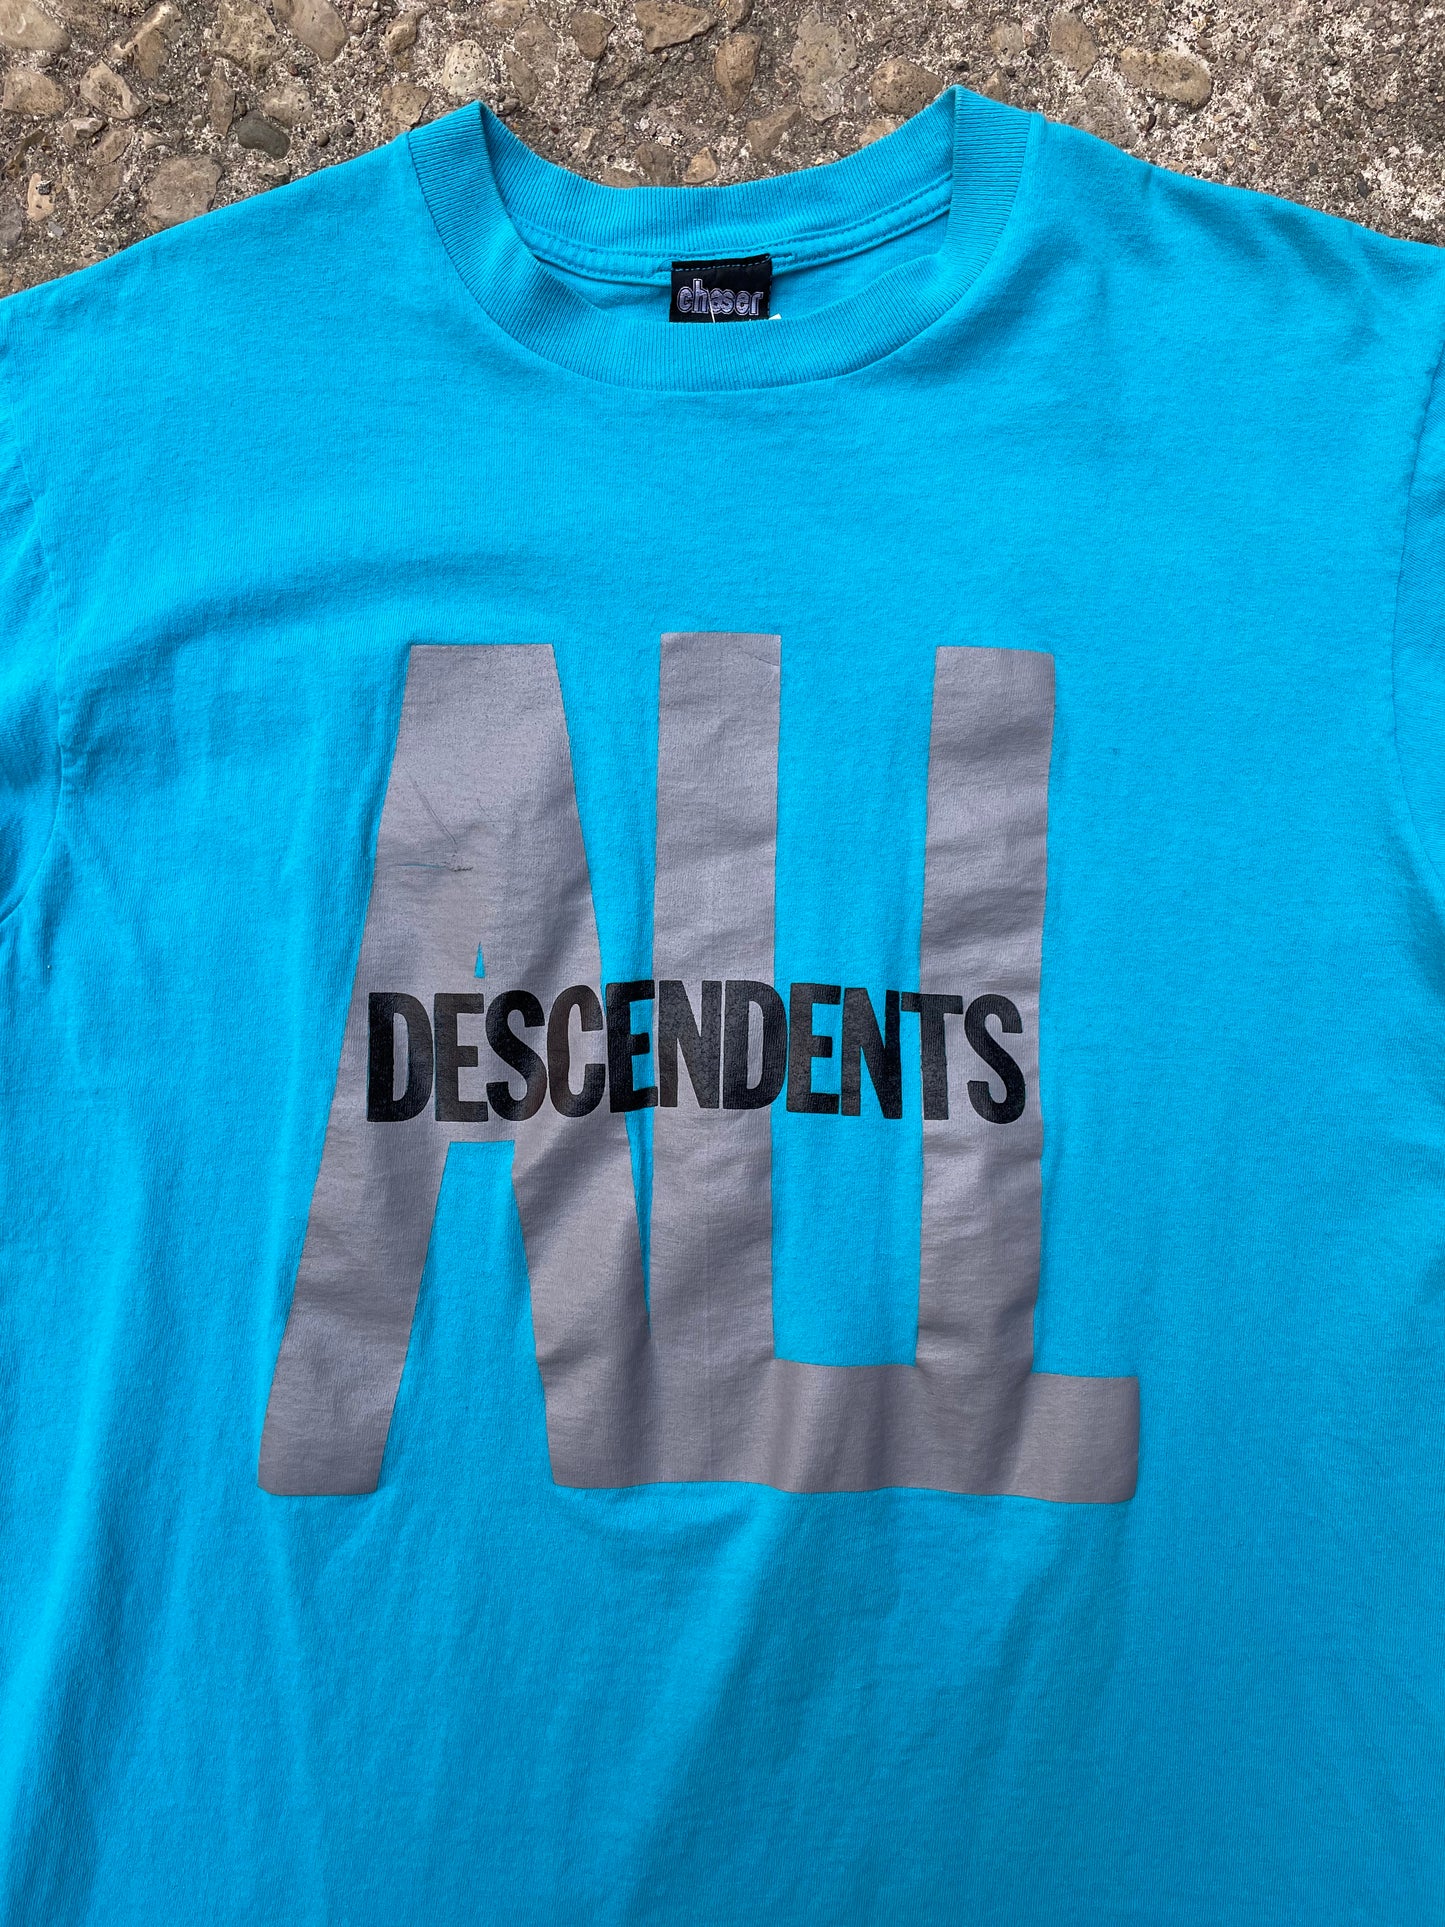 1990's Descendents 'All' Band T-Shirt - L